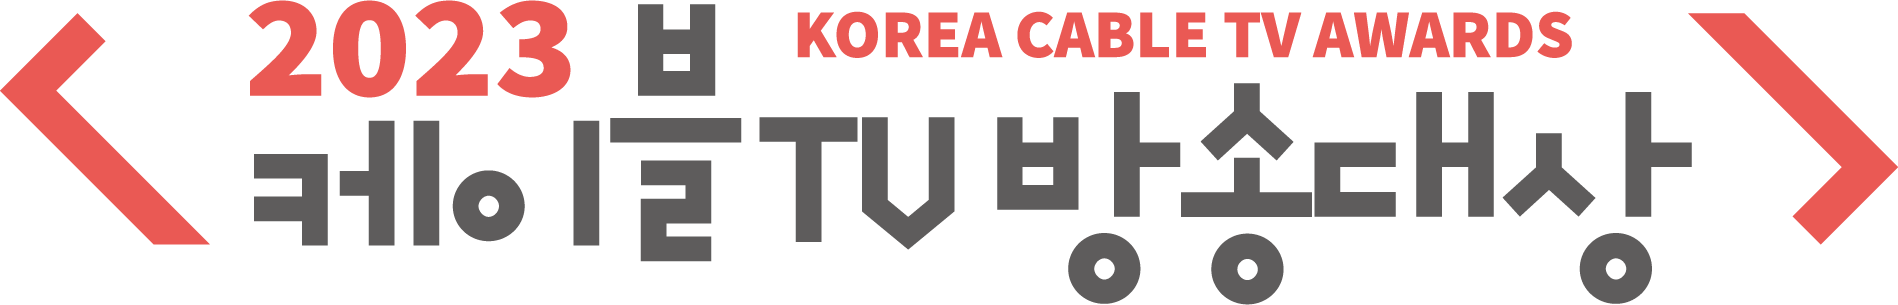 Korea Cable TV 2018